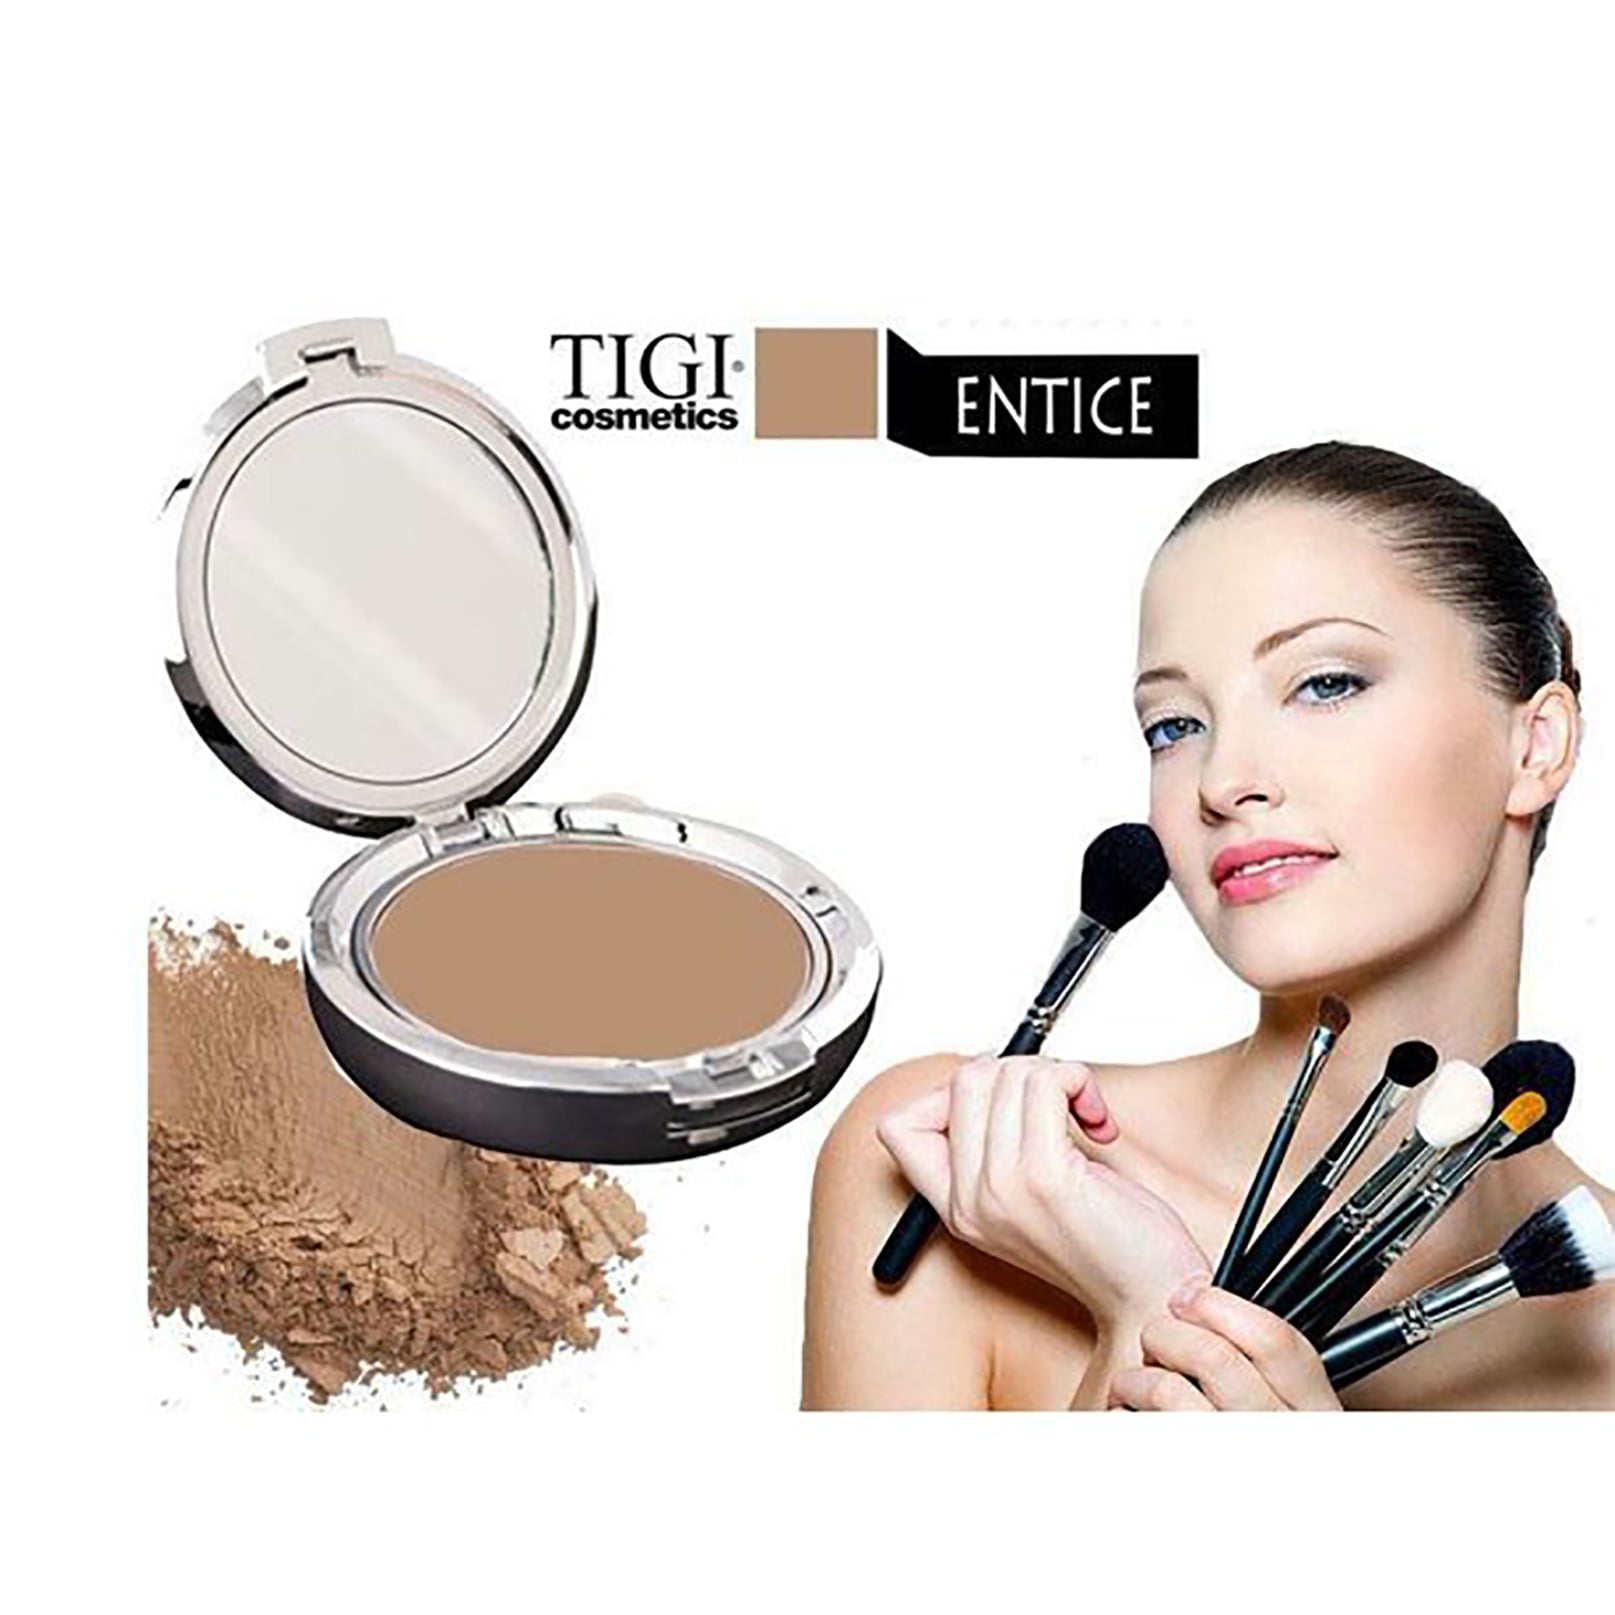 TIGI Cosmetics Powder Foundation Shade All Skin Types Oz - Walmart.com